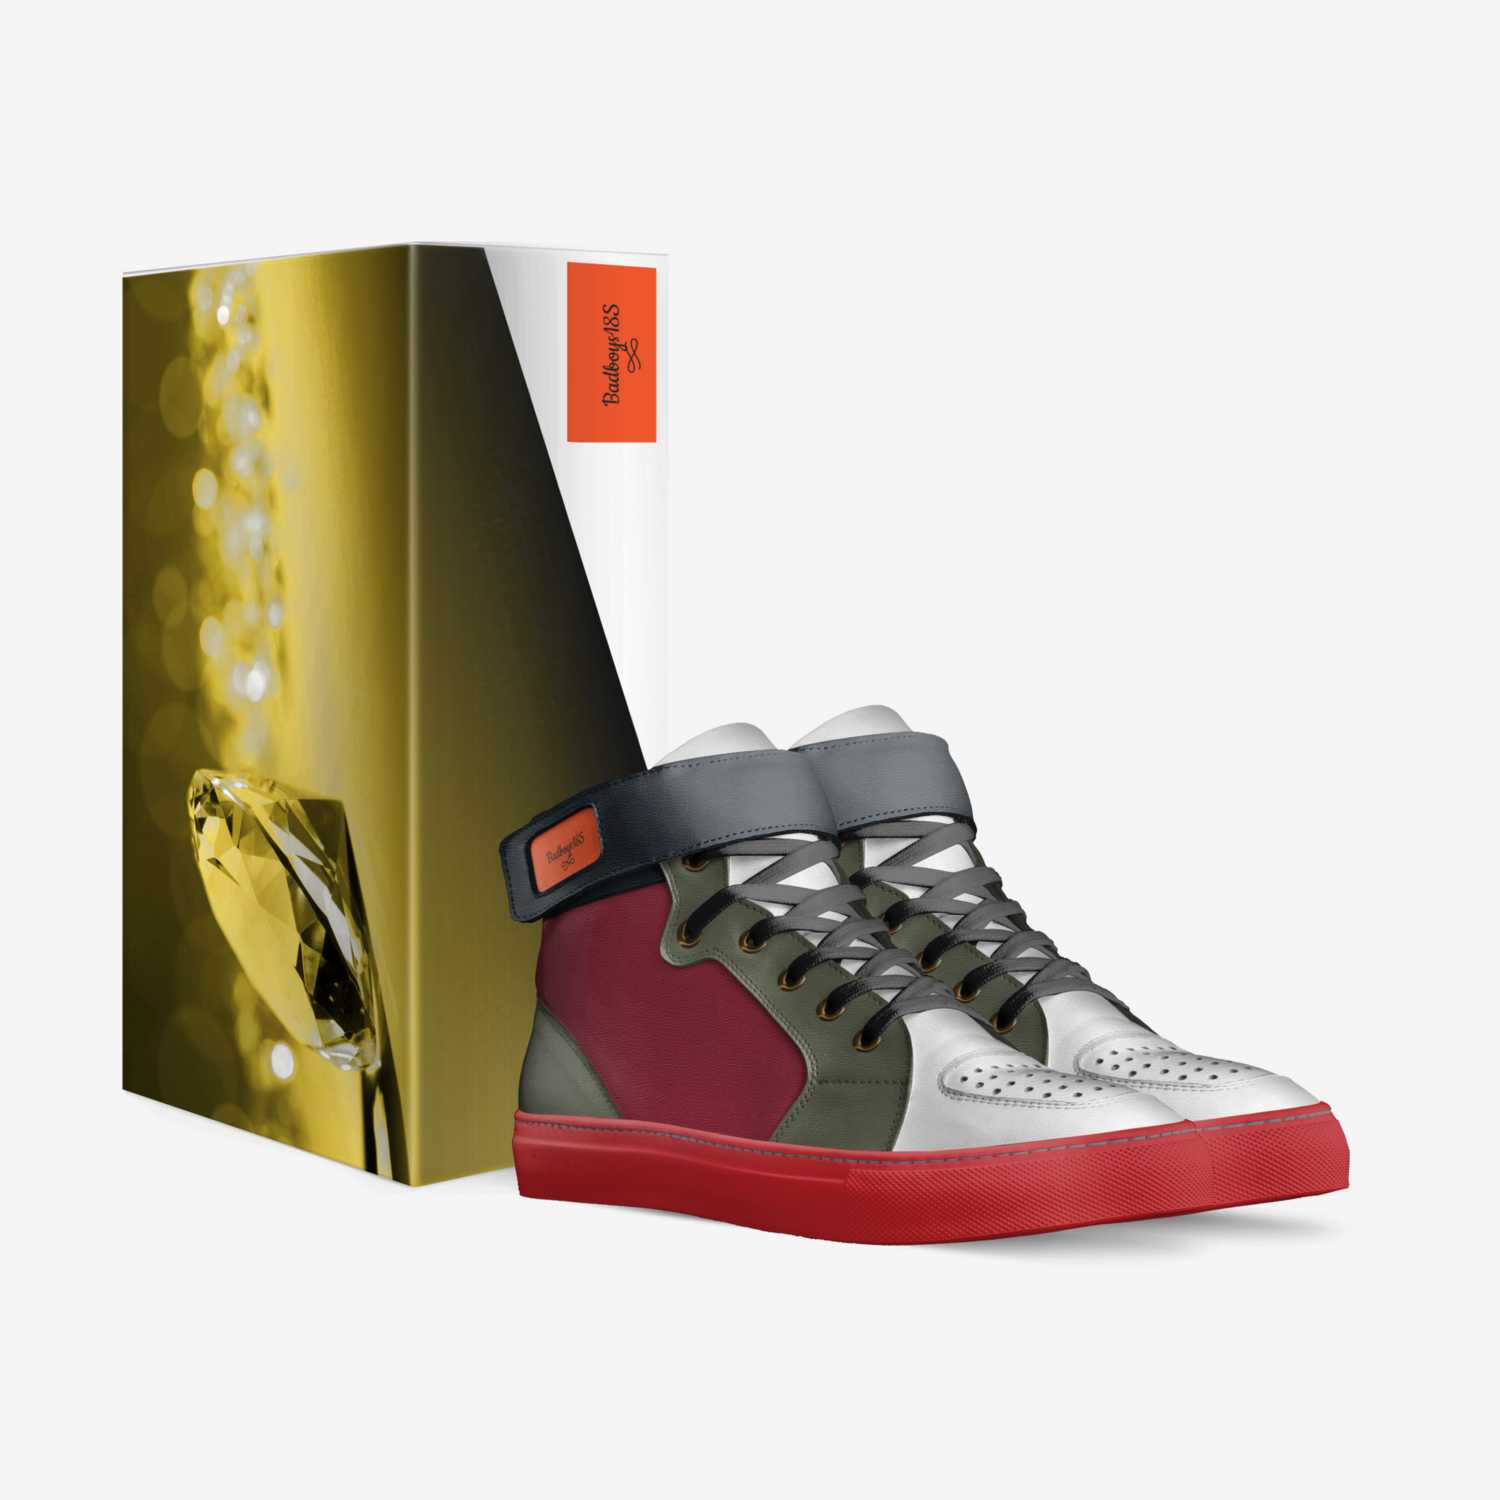 Badboys18S custom made in Italy shoes by Abuba | Box view